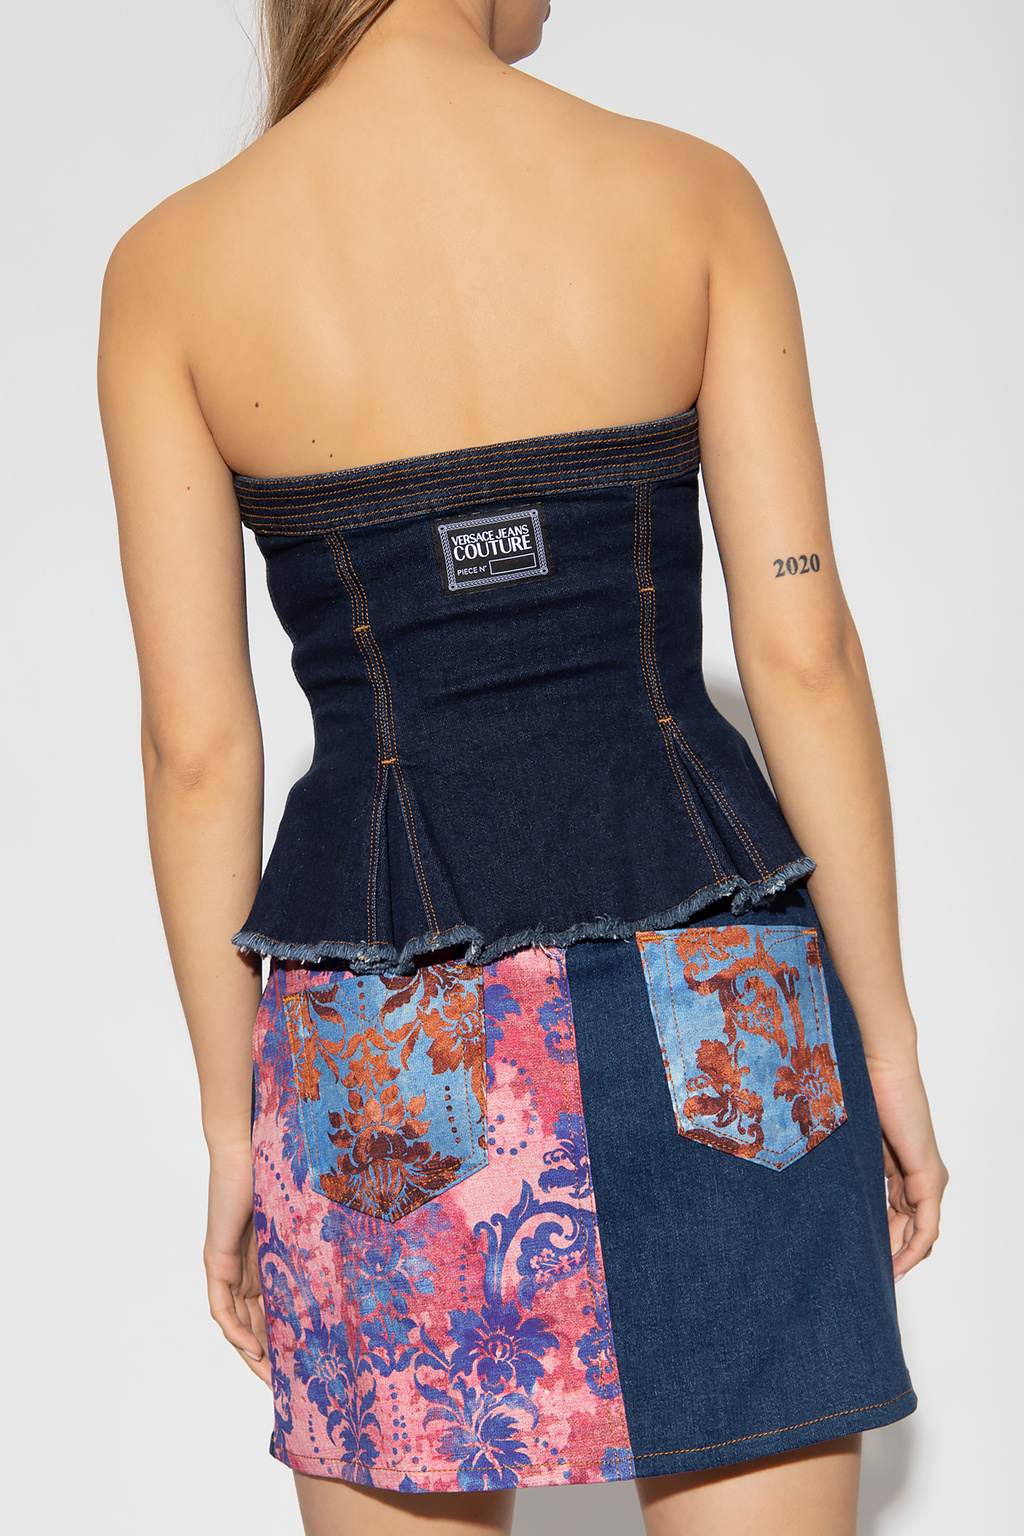 handbag calvin klein ruffle jeans sculpted mono shoulder pouch k60k608930 bds Denim top